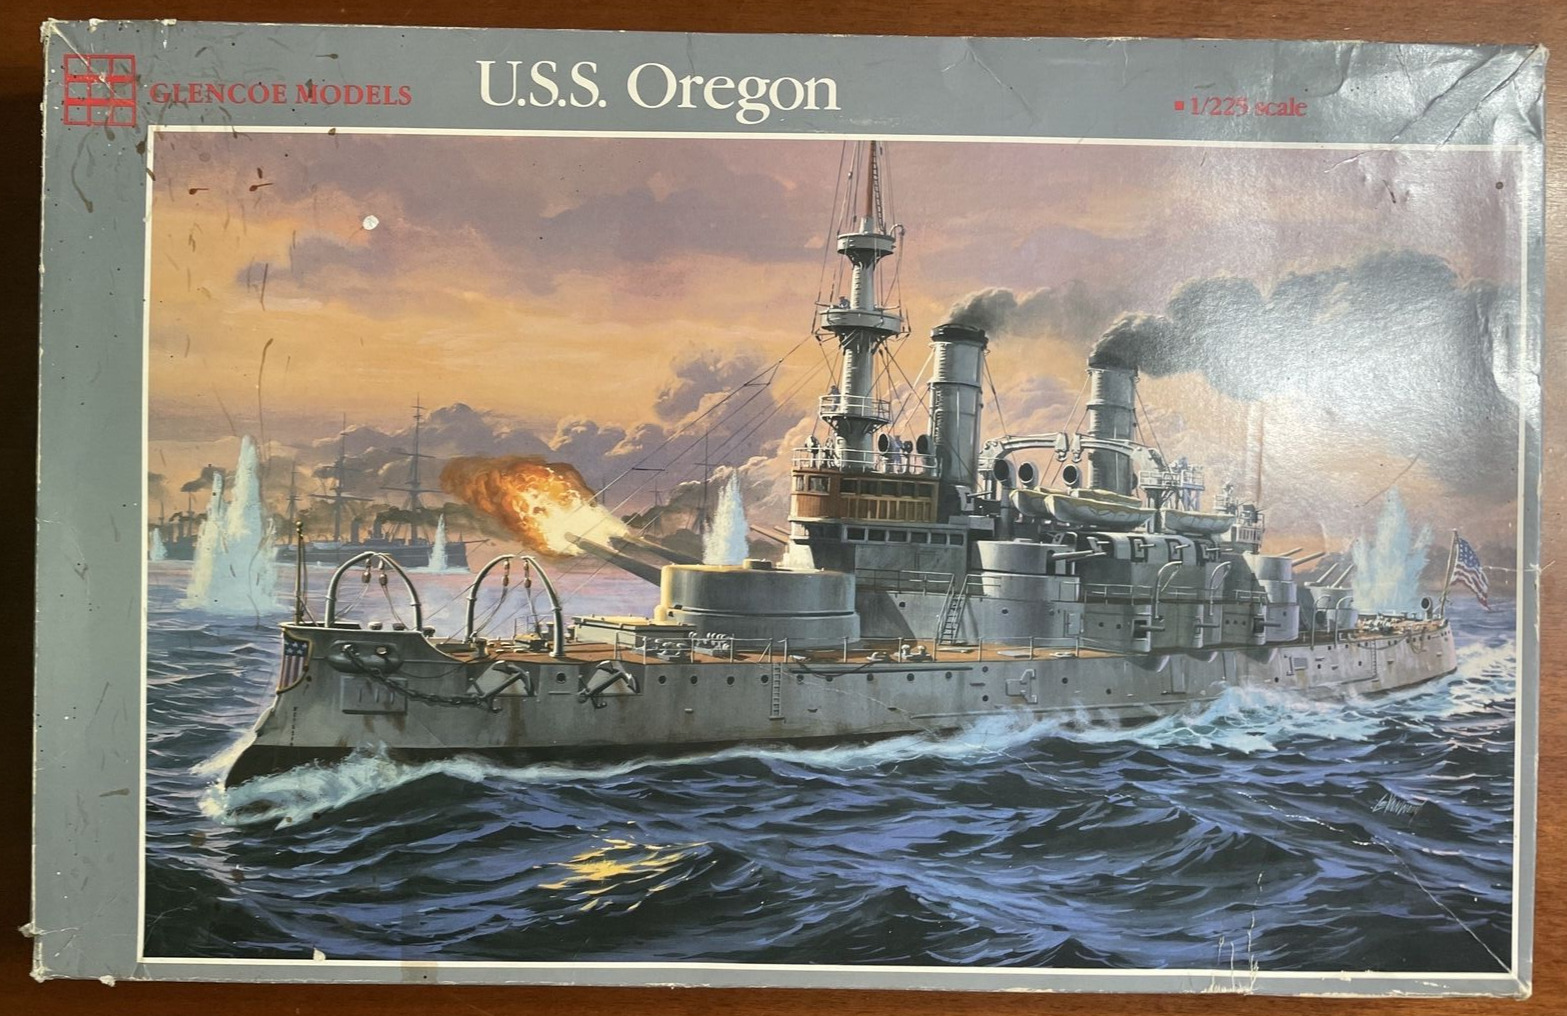 USS Oregon - Glencoe Models 1/225 scale Unassembled Ship Kit#08301 - Poor Box